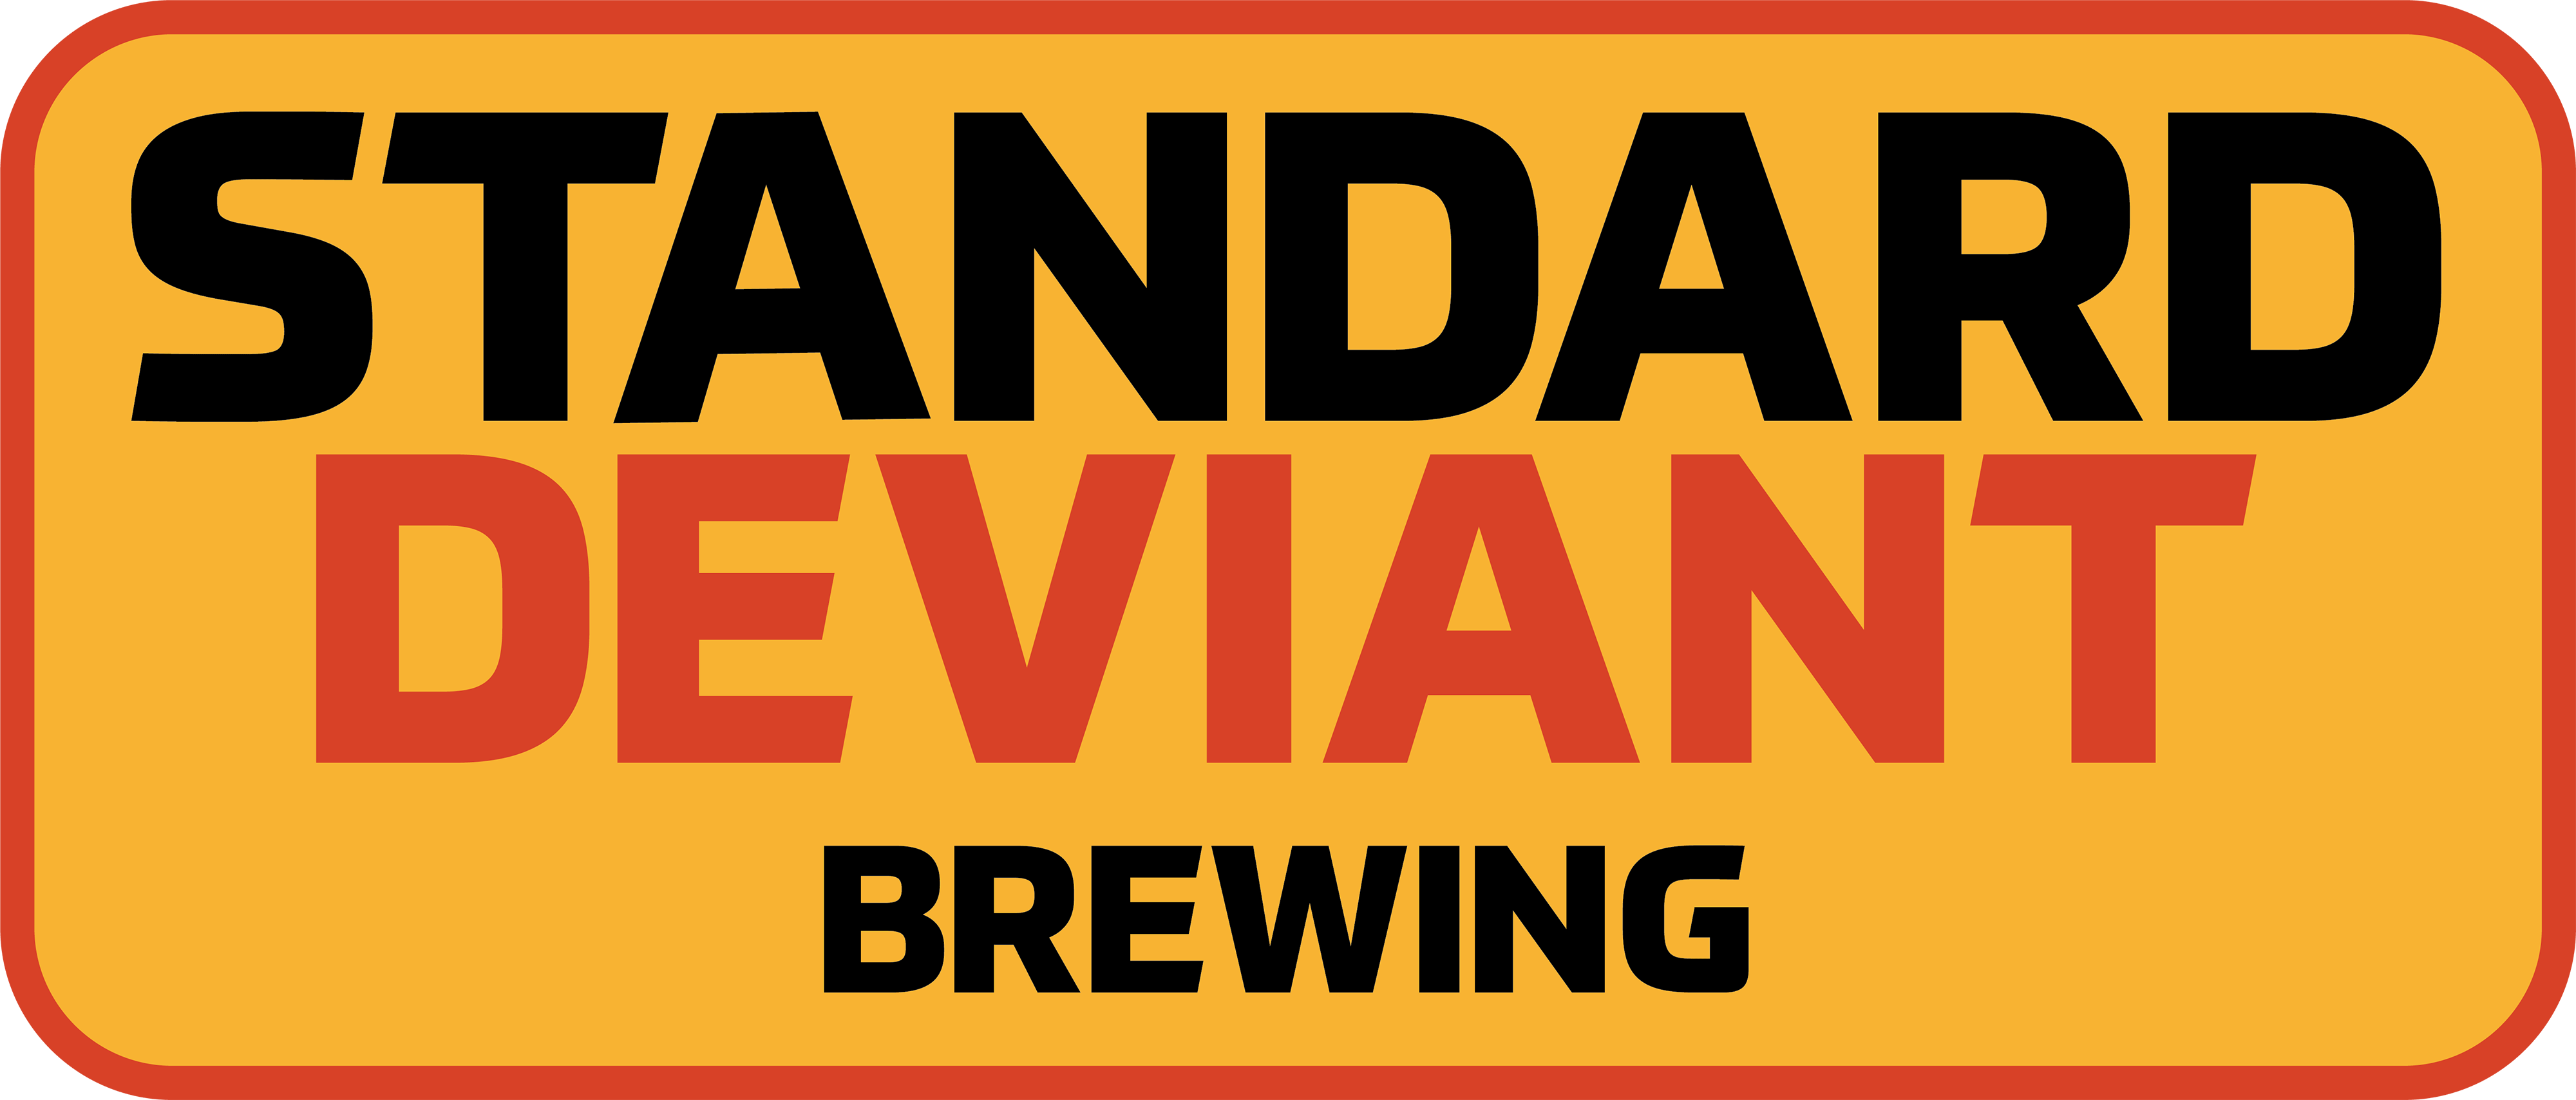 Deviant Logo - Standard Deviant Brewing